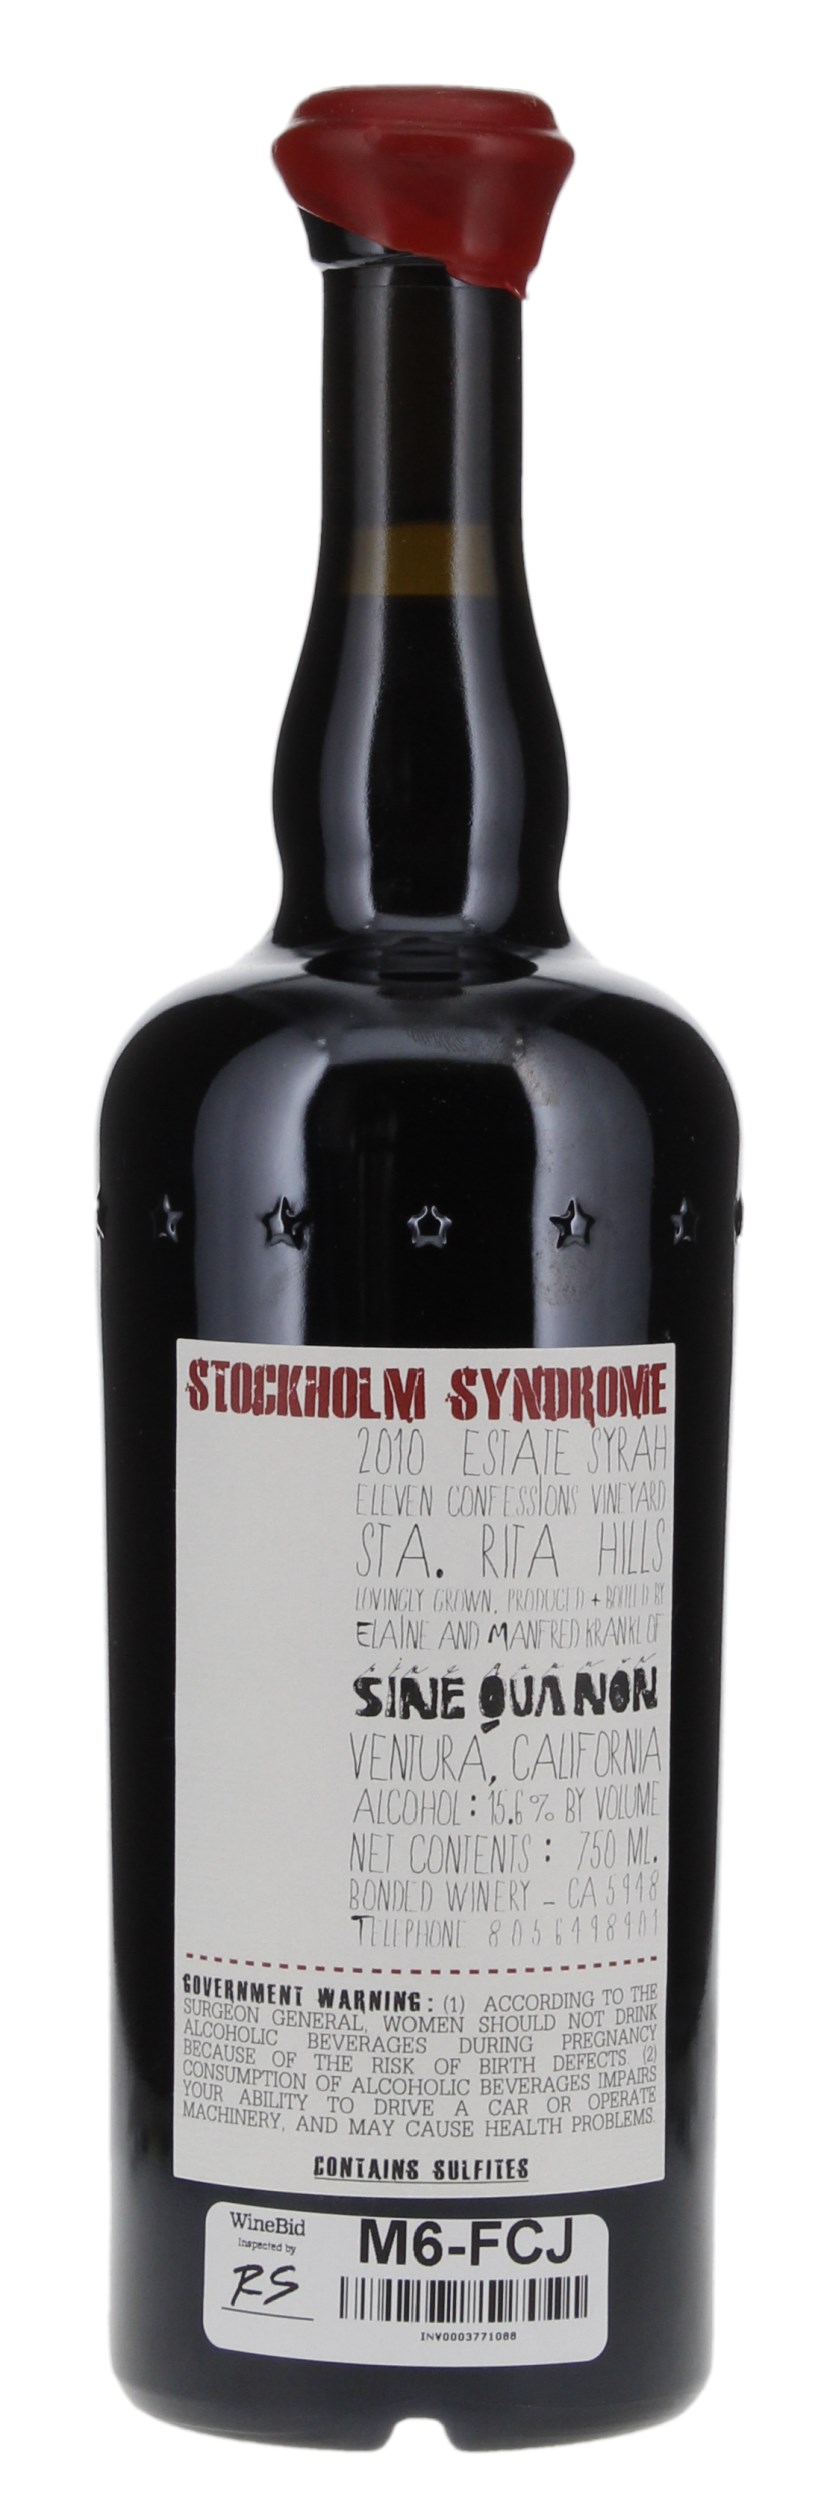 2010 Sine Qua Non Stockholm Syndrome Eleven Confessions Vineyard Syrah, 750ml